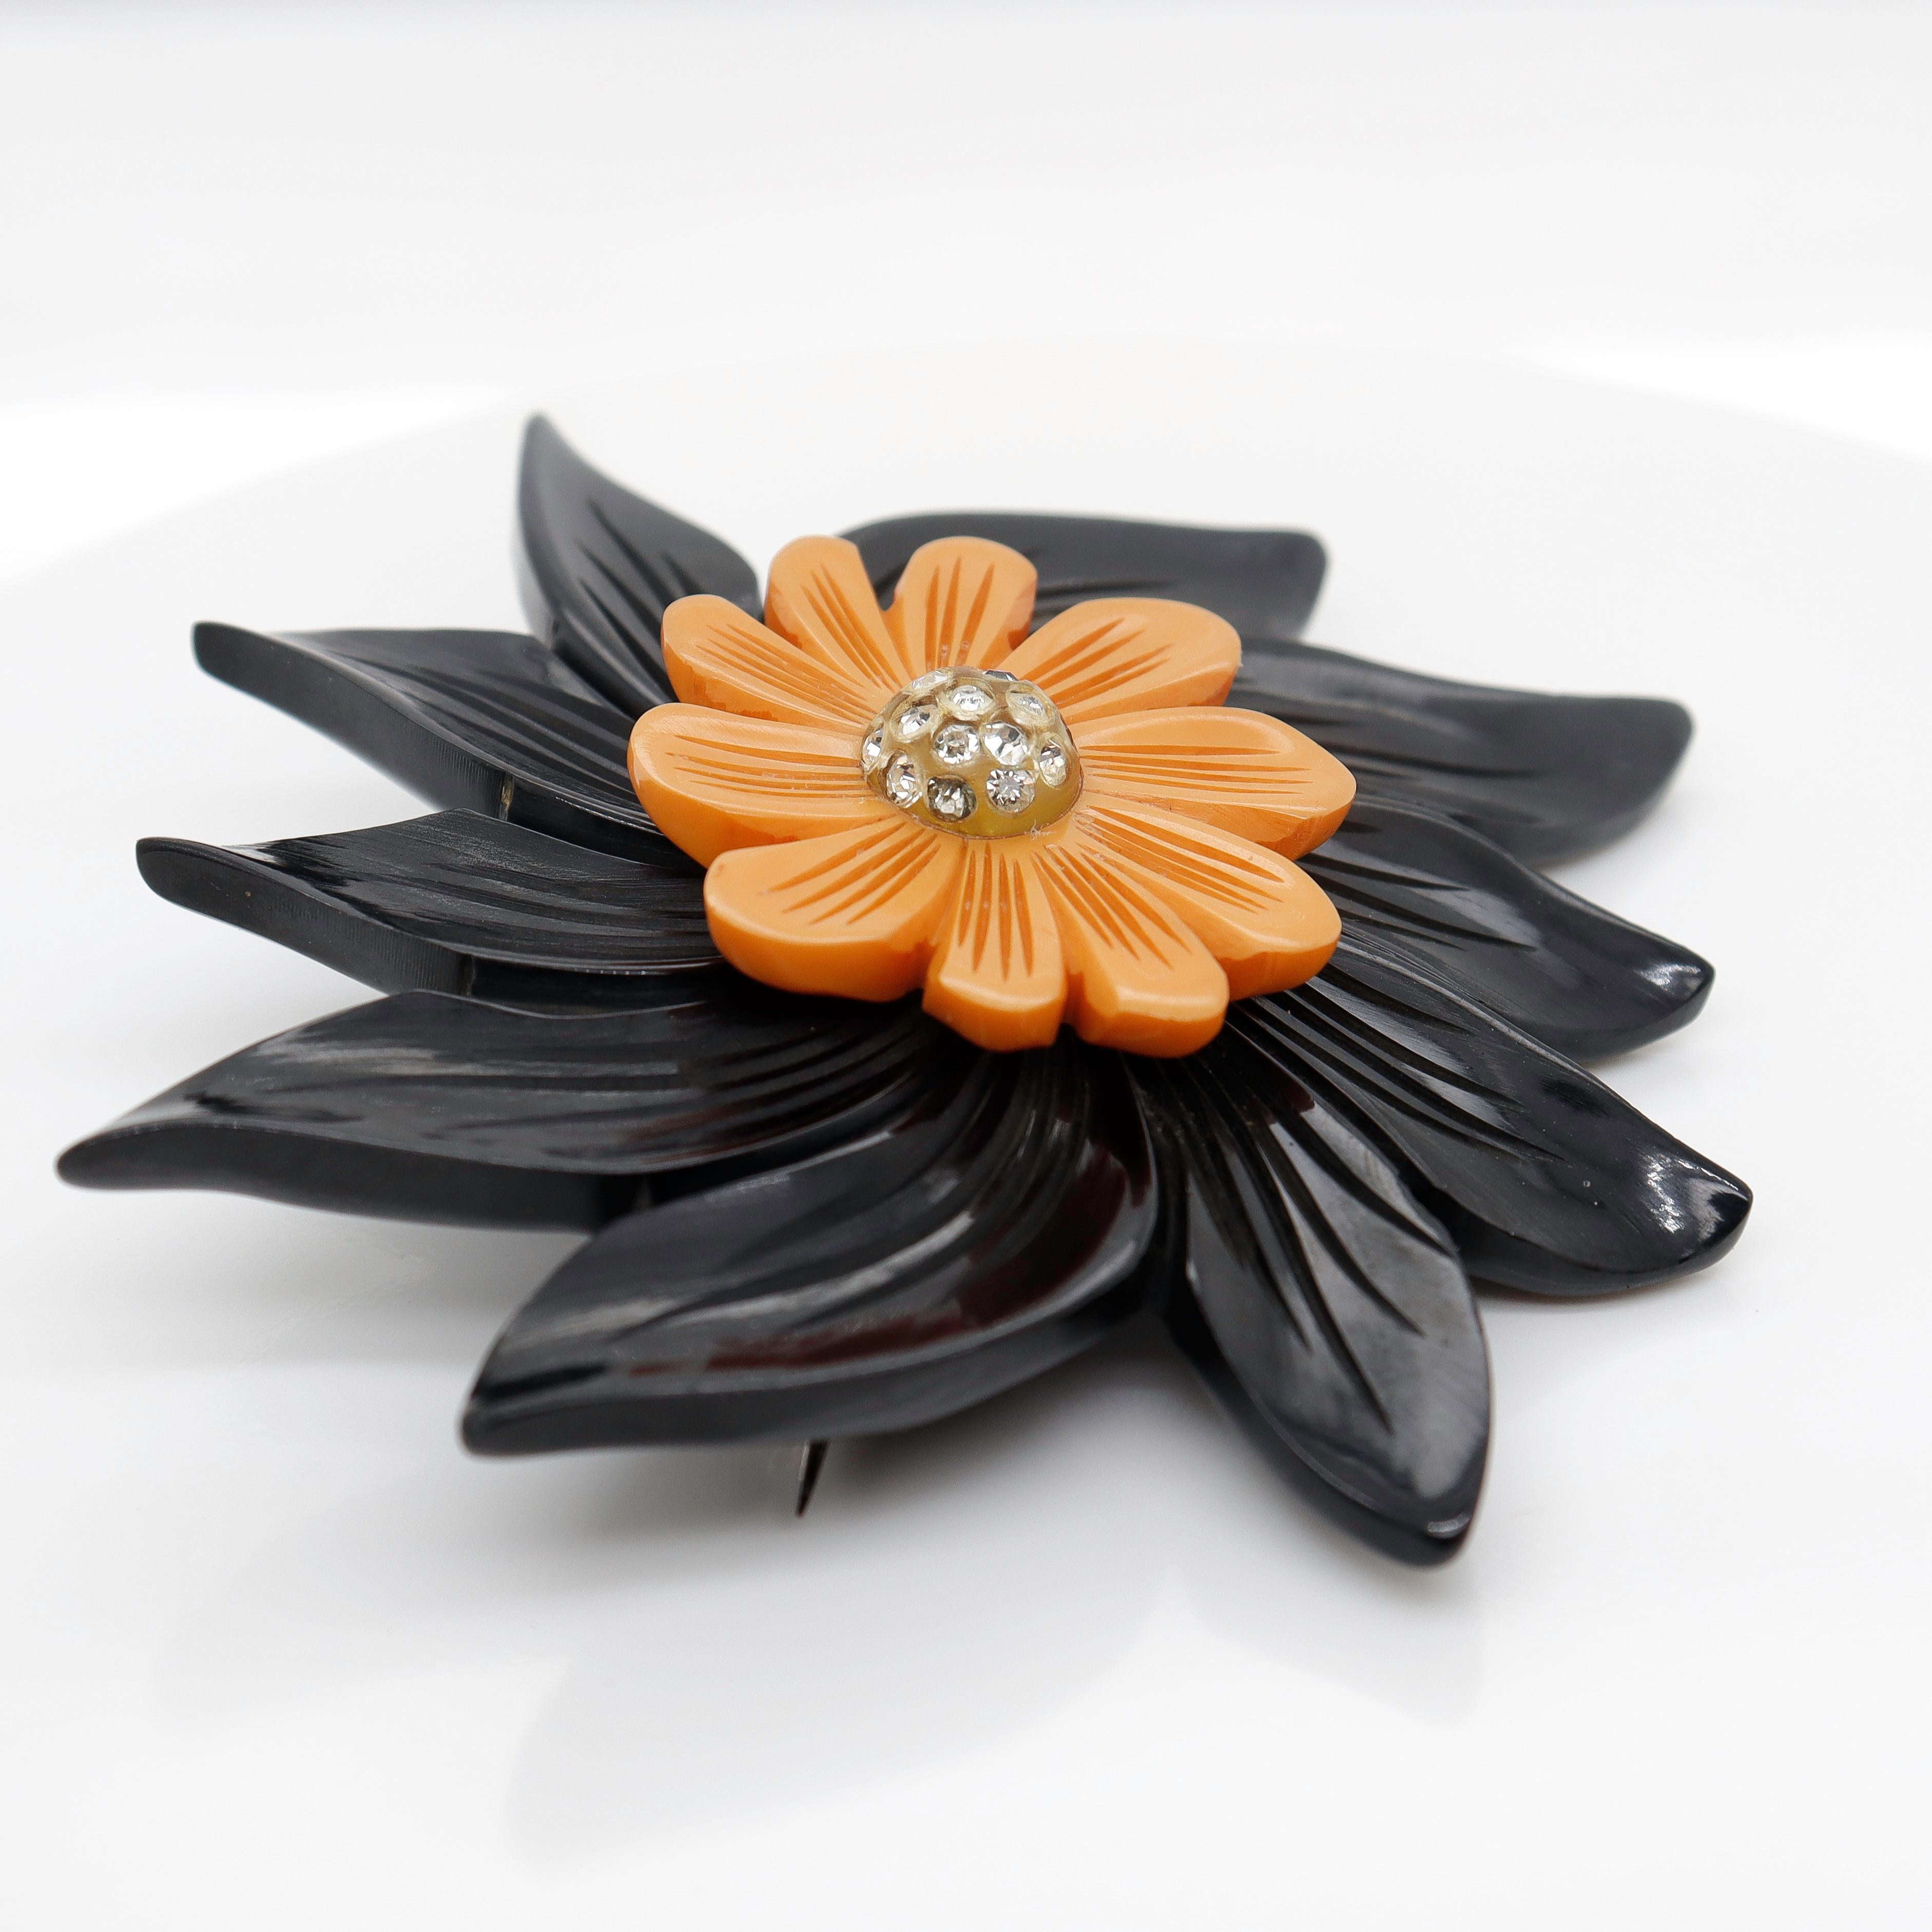 2-Color Black & Orange Bakelite Flower Brooch or Pin with Rhinestones In Good Condition For Sale In Philadelphia, PA